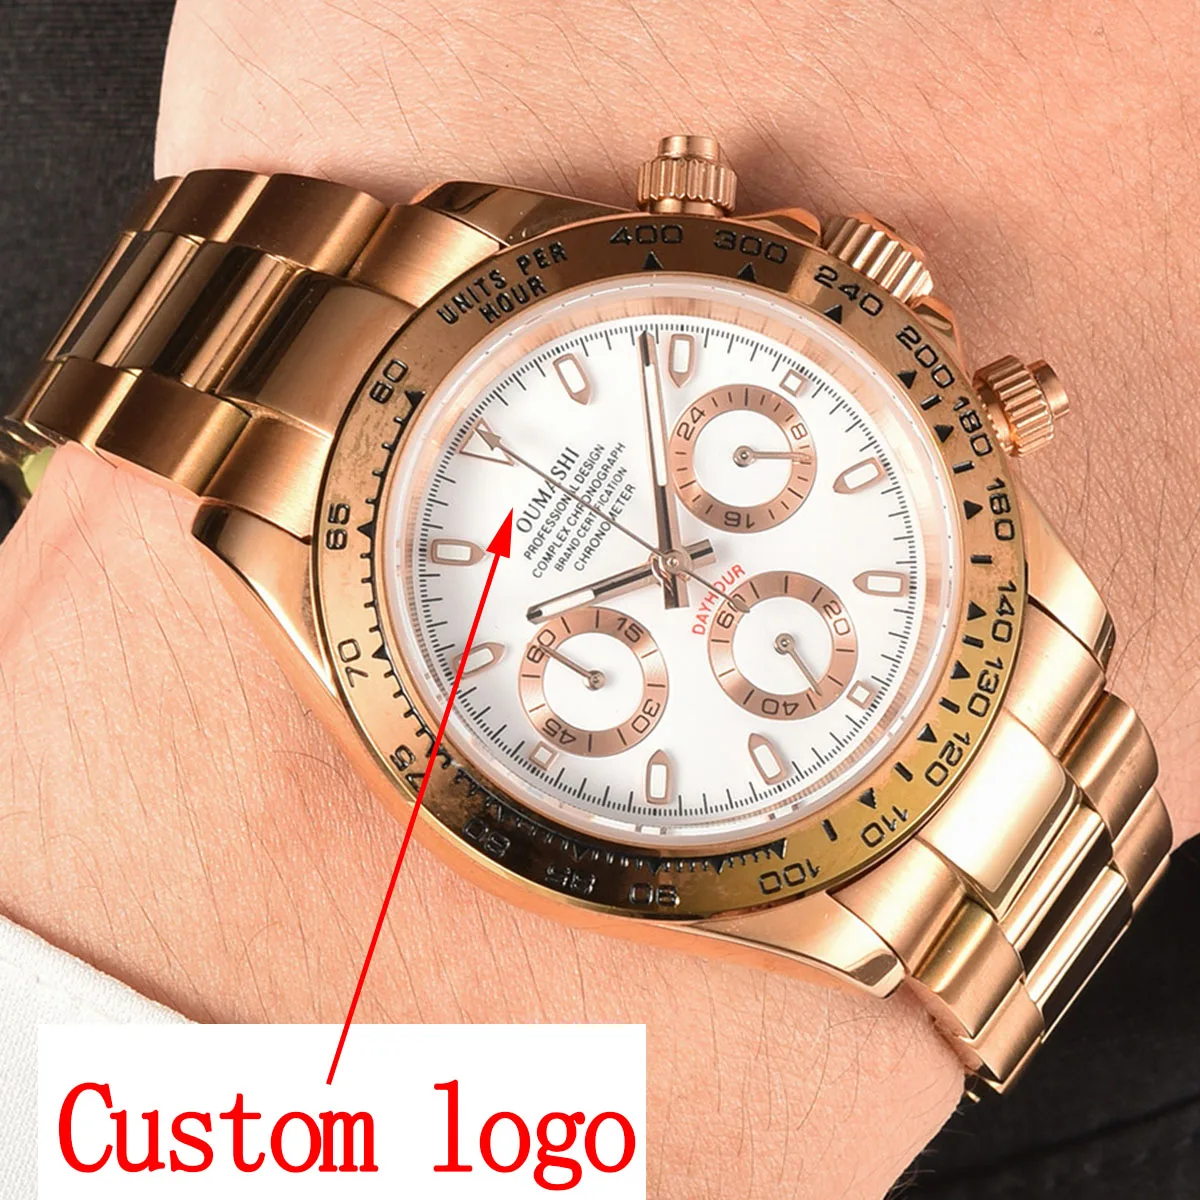 

vk63 watch chronograph watch luxury watch men custom logo dial 40mm New Quartz Men's Watches Sapphire glass Stainless Waterproof